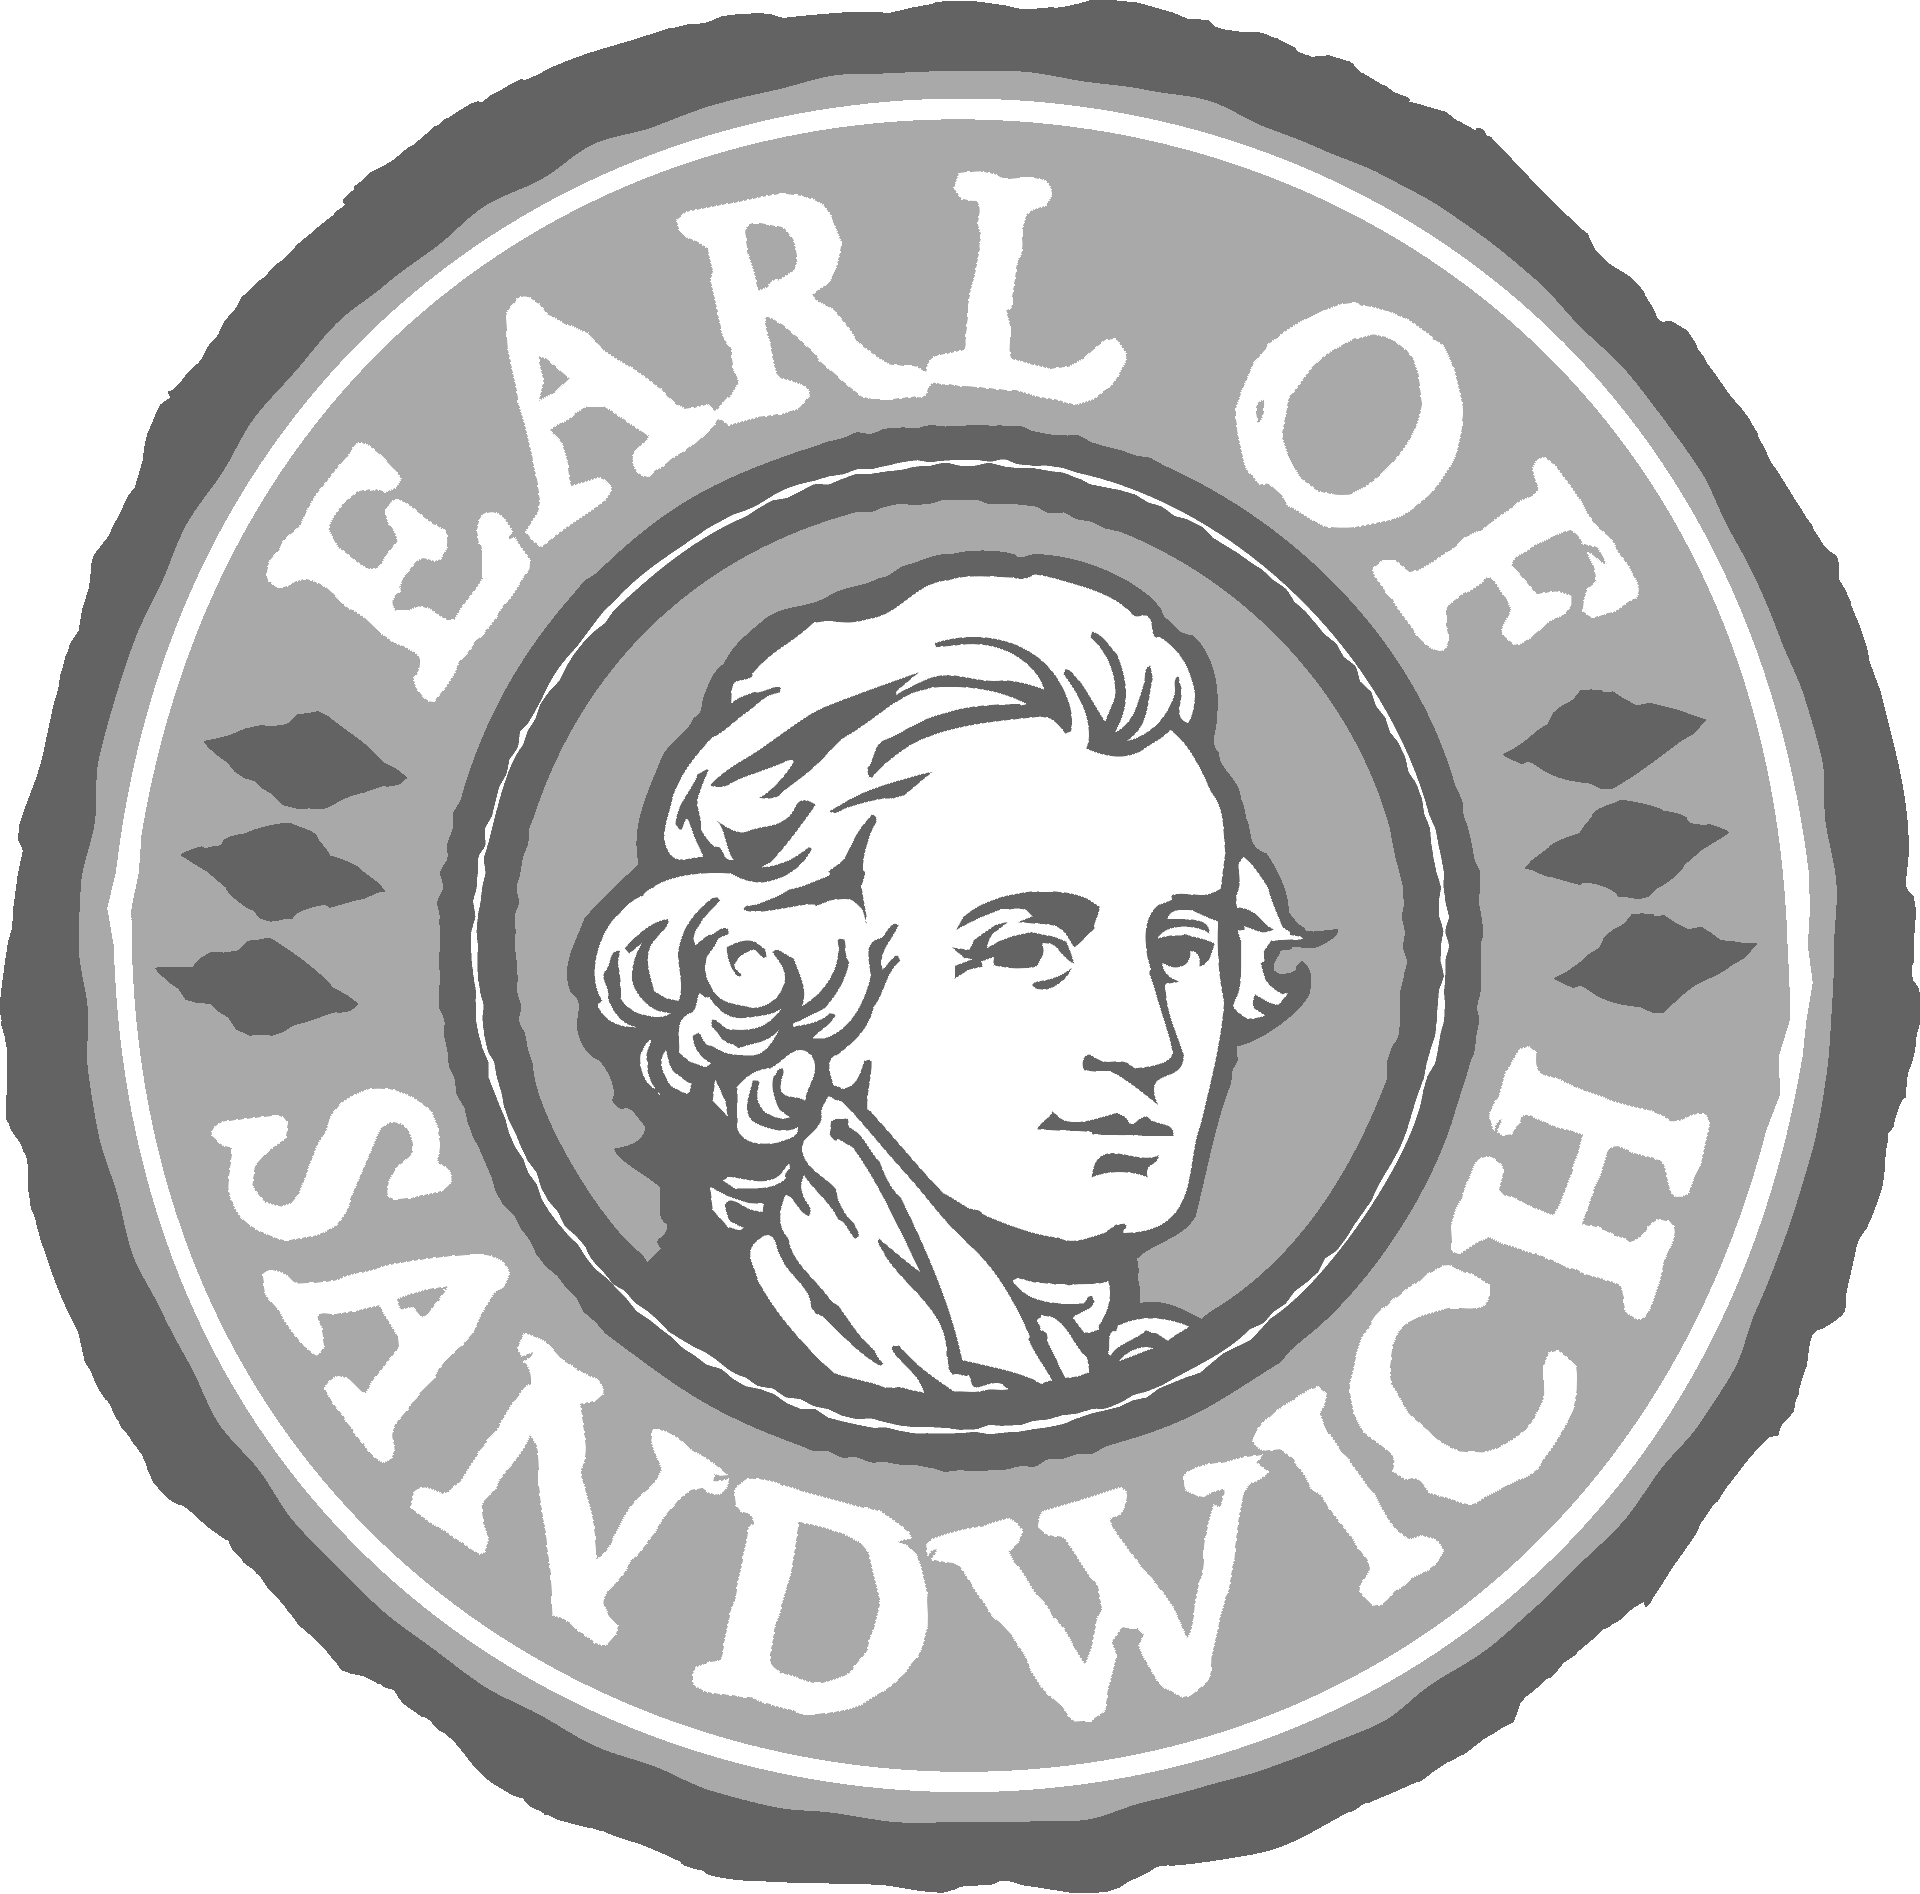 REST - Earl_of_Sandwich_(restaurant)_logo 01.png